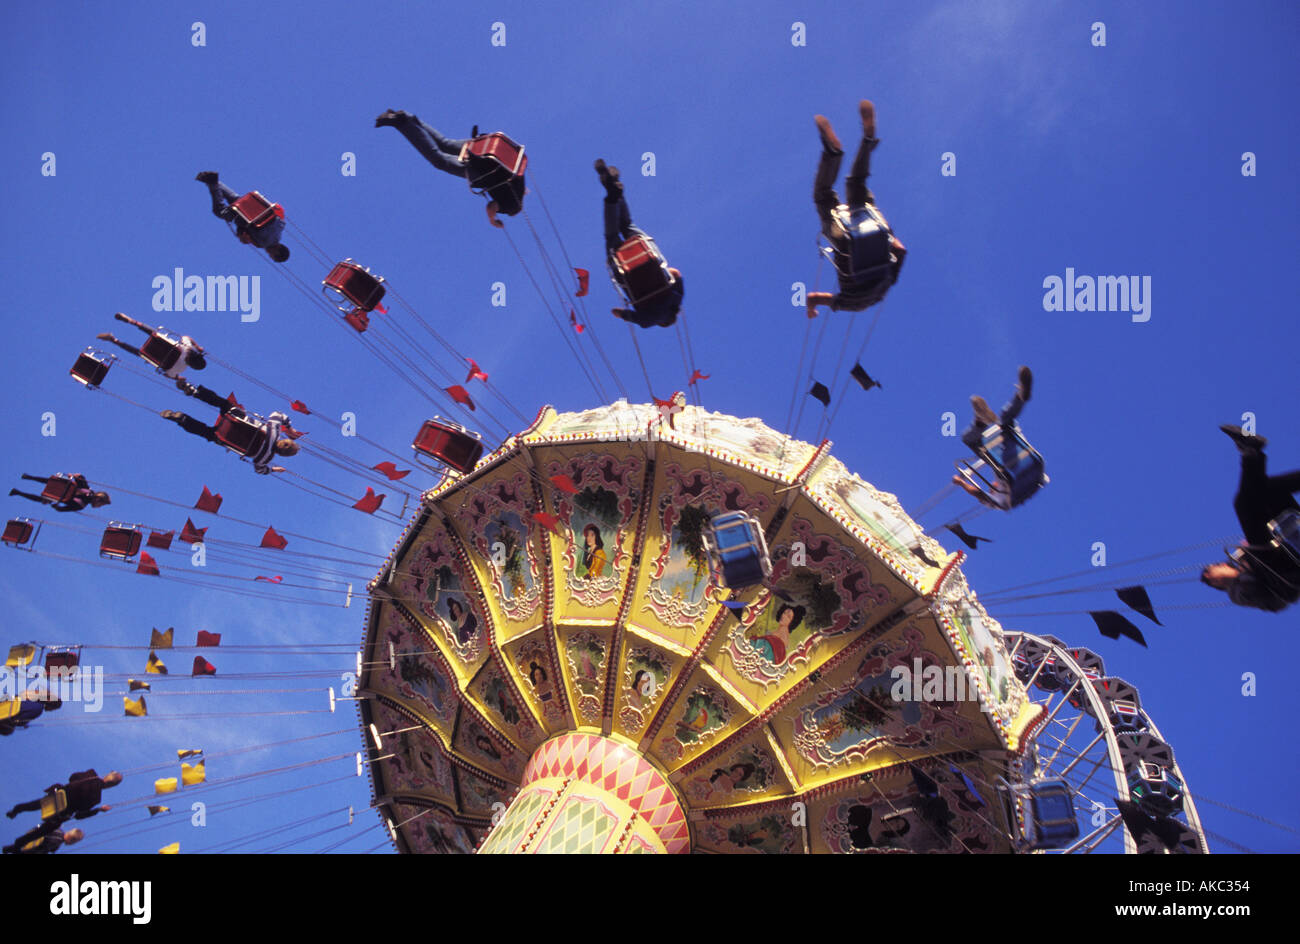 Amusement park fairground ride Stock Photo